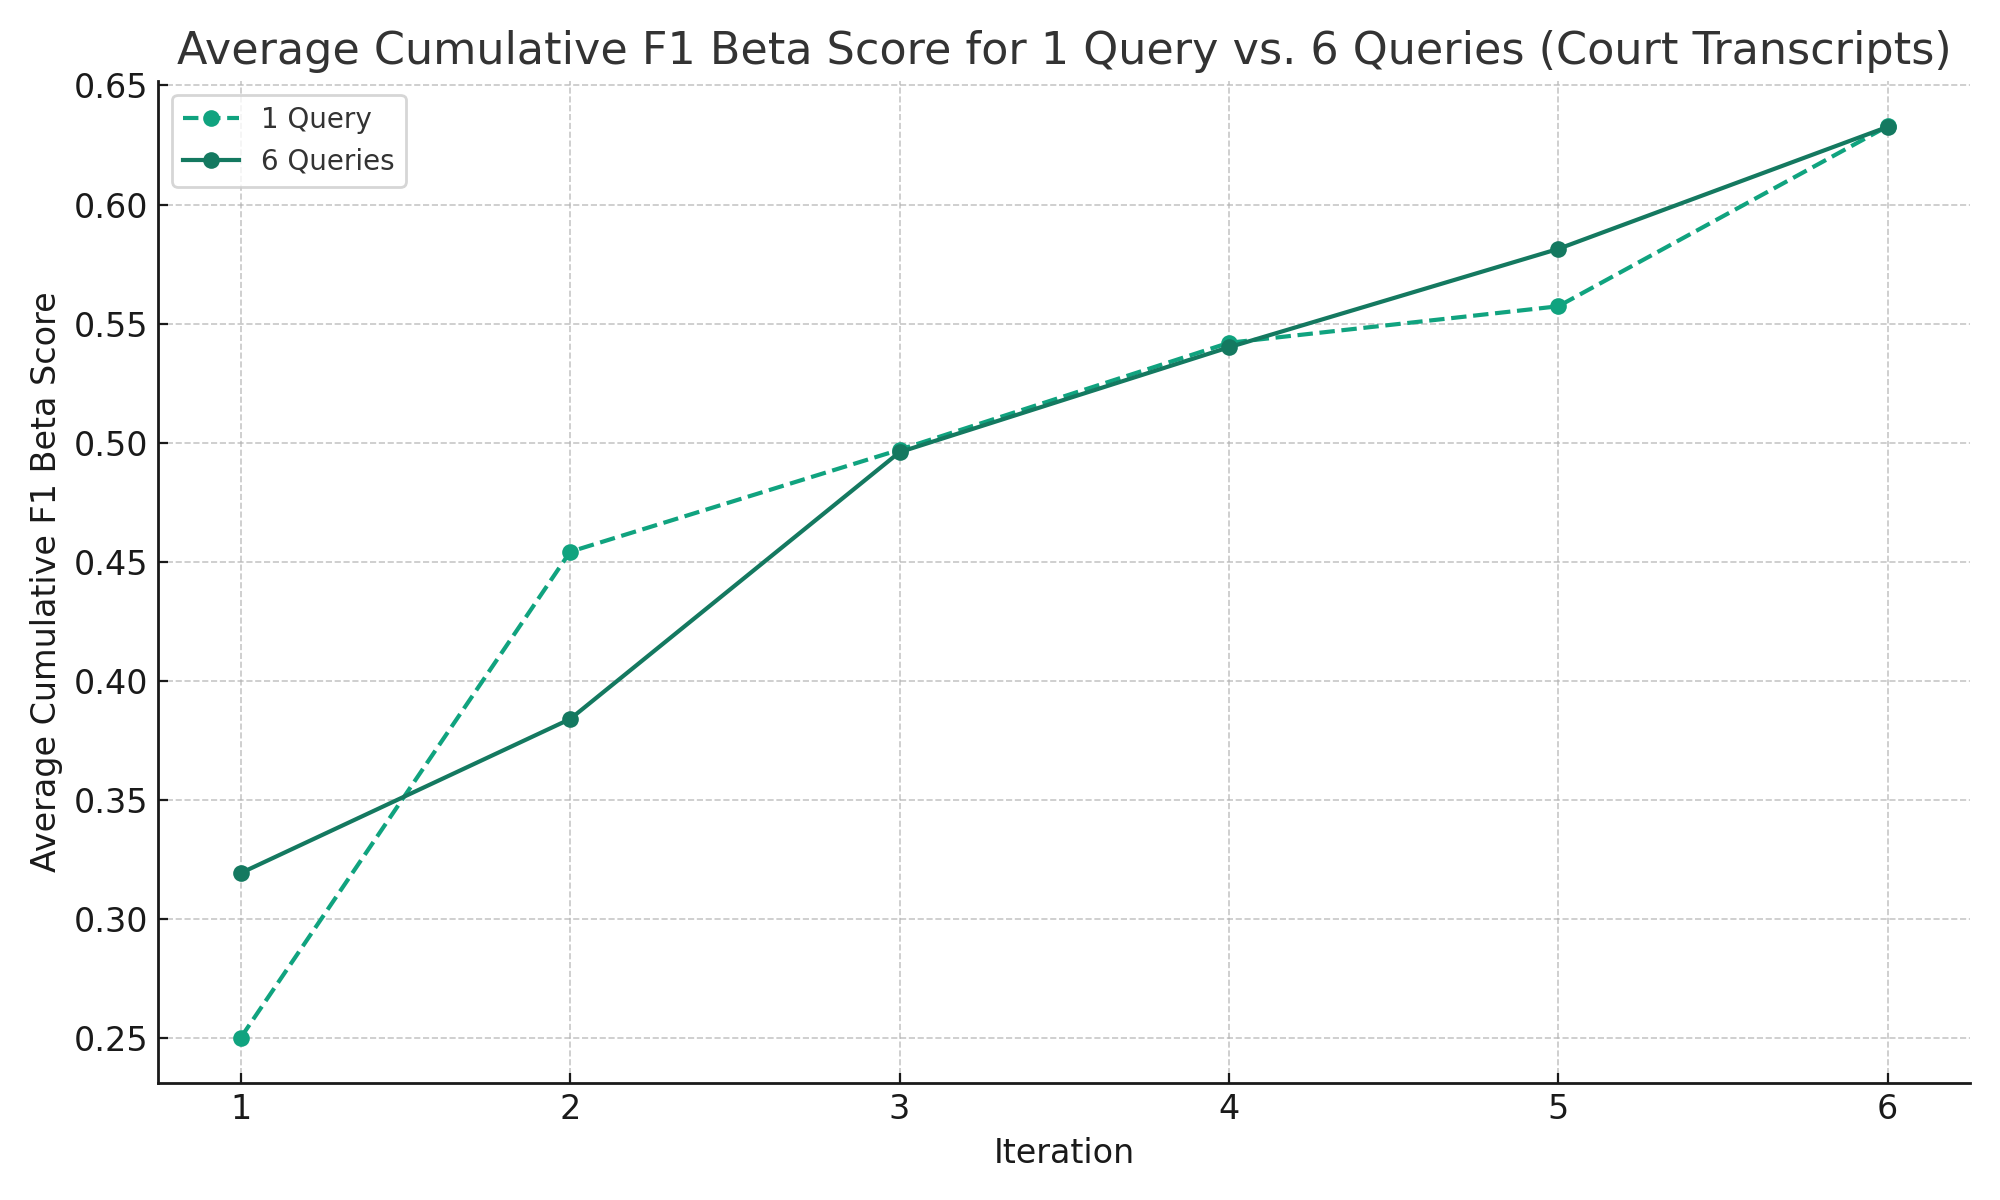 Figure 2: Average Cumulative F1 Beta Score for 1 Query vs. 6 Queries (Transcripts)